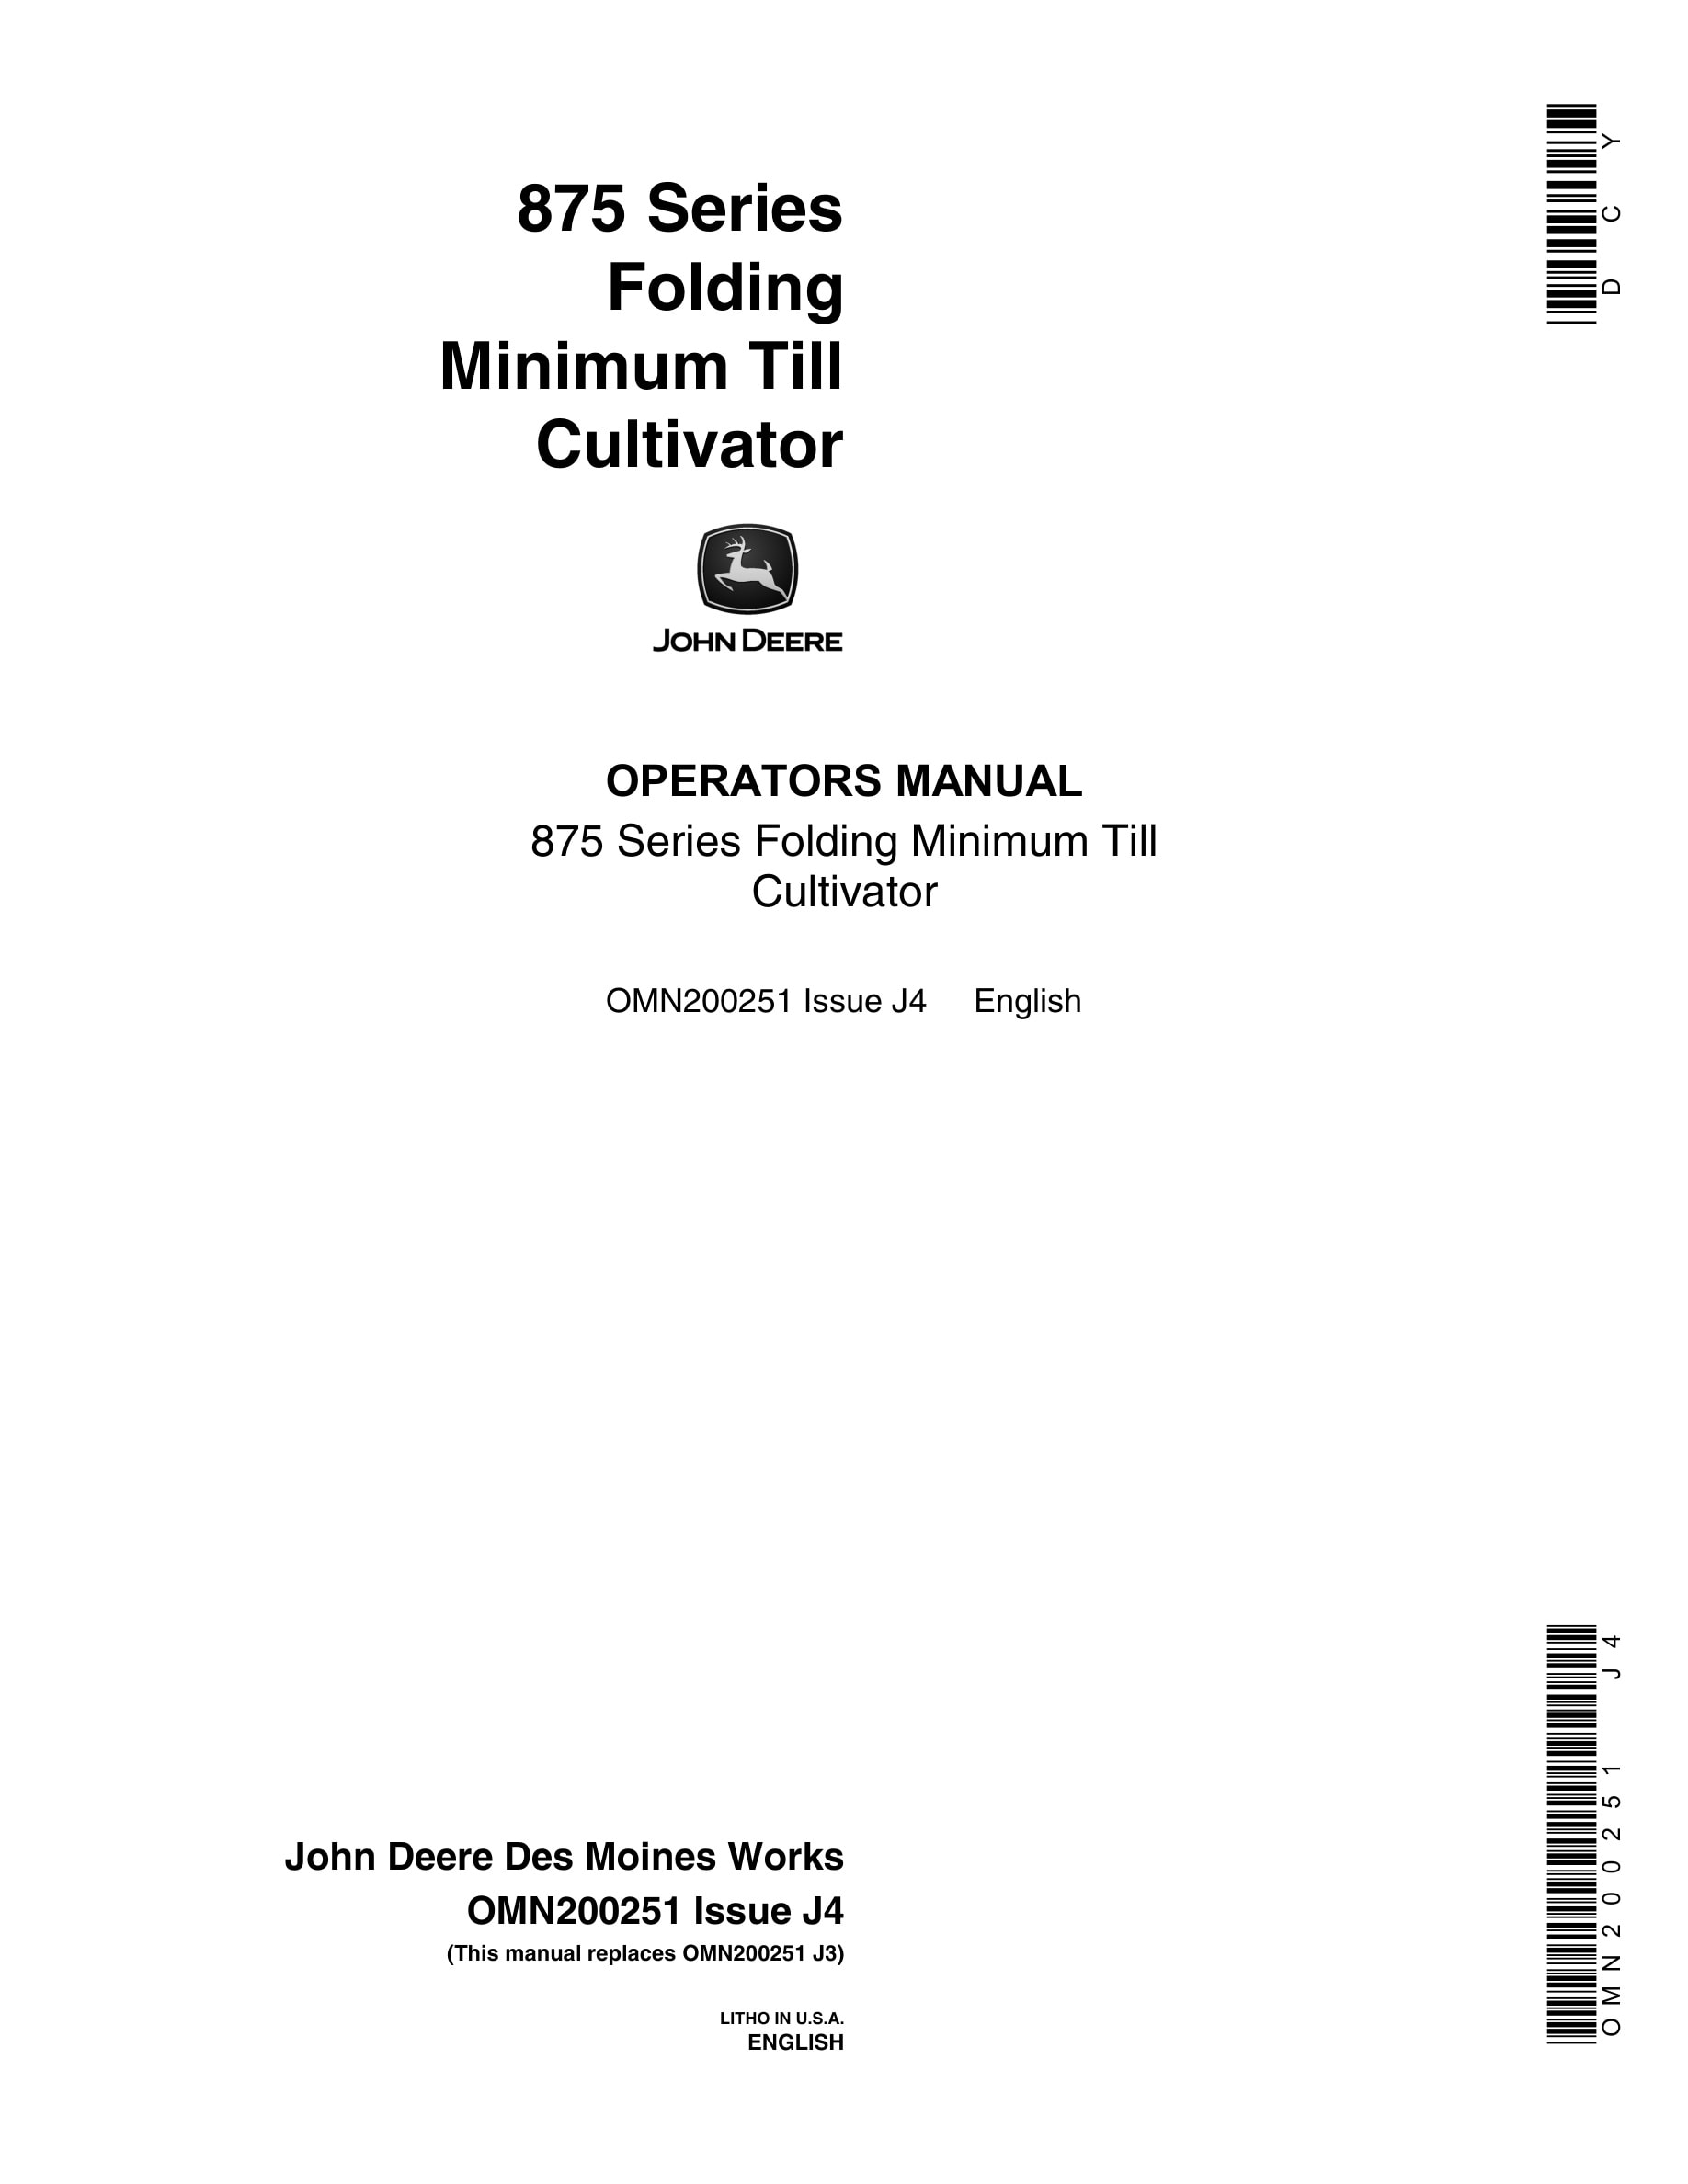 John Deere 875 Series Folding Minimum Till Cultivator Operator Manual OMN200251-1